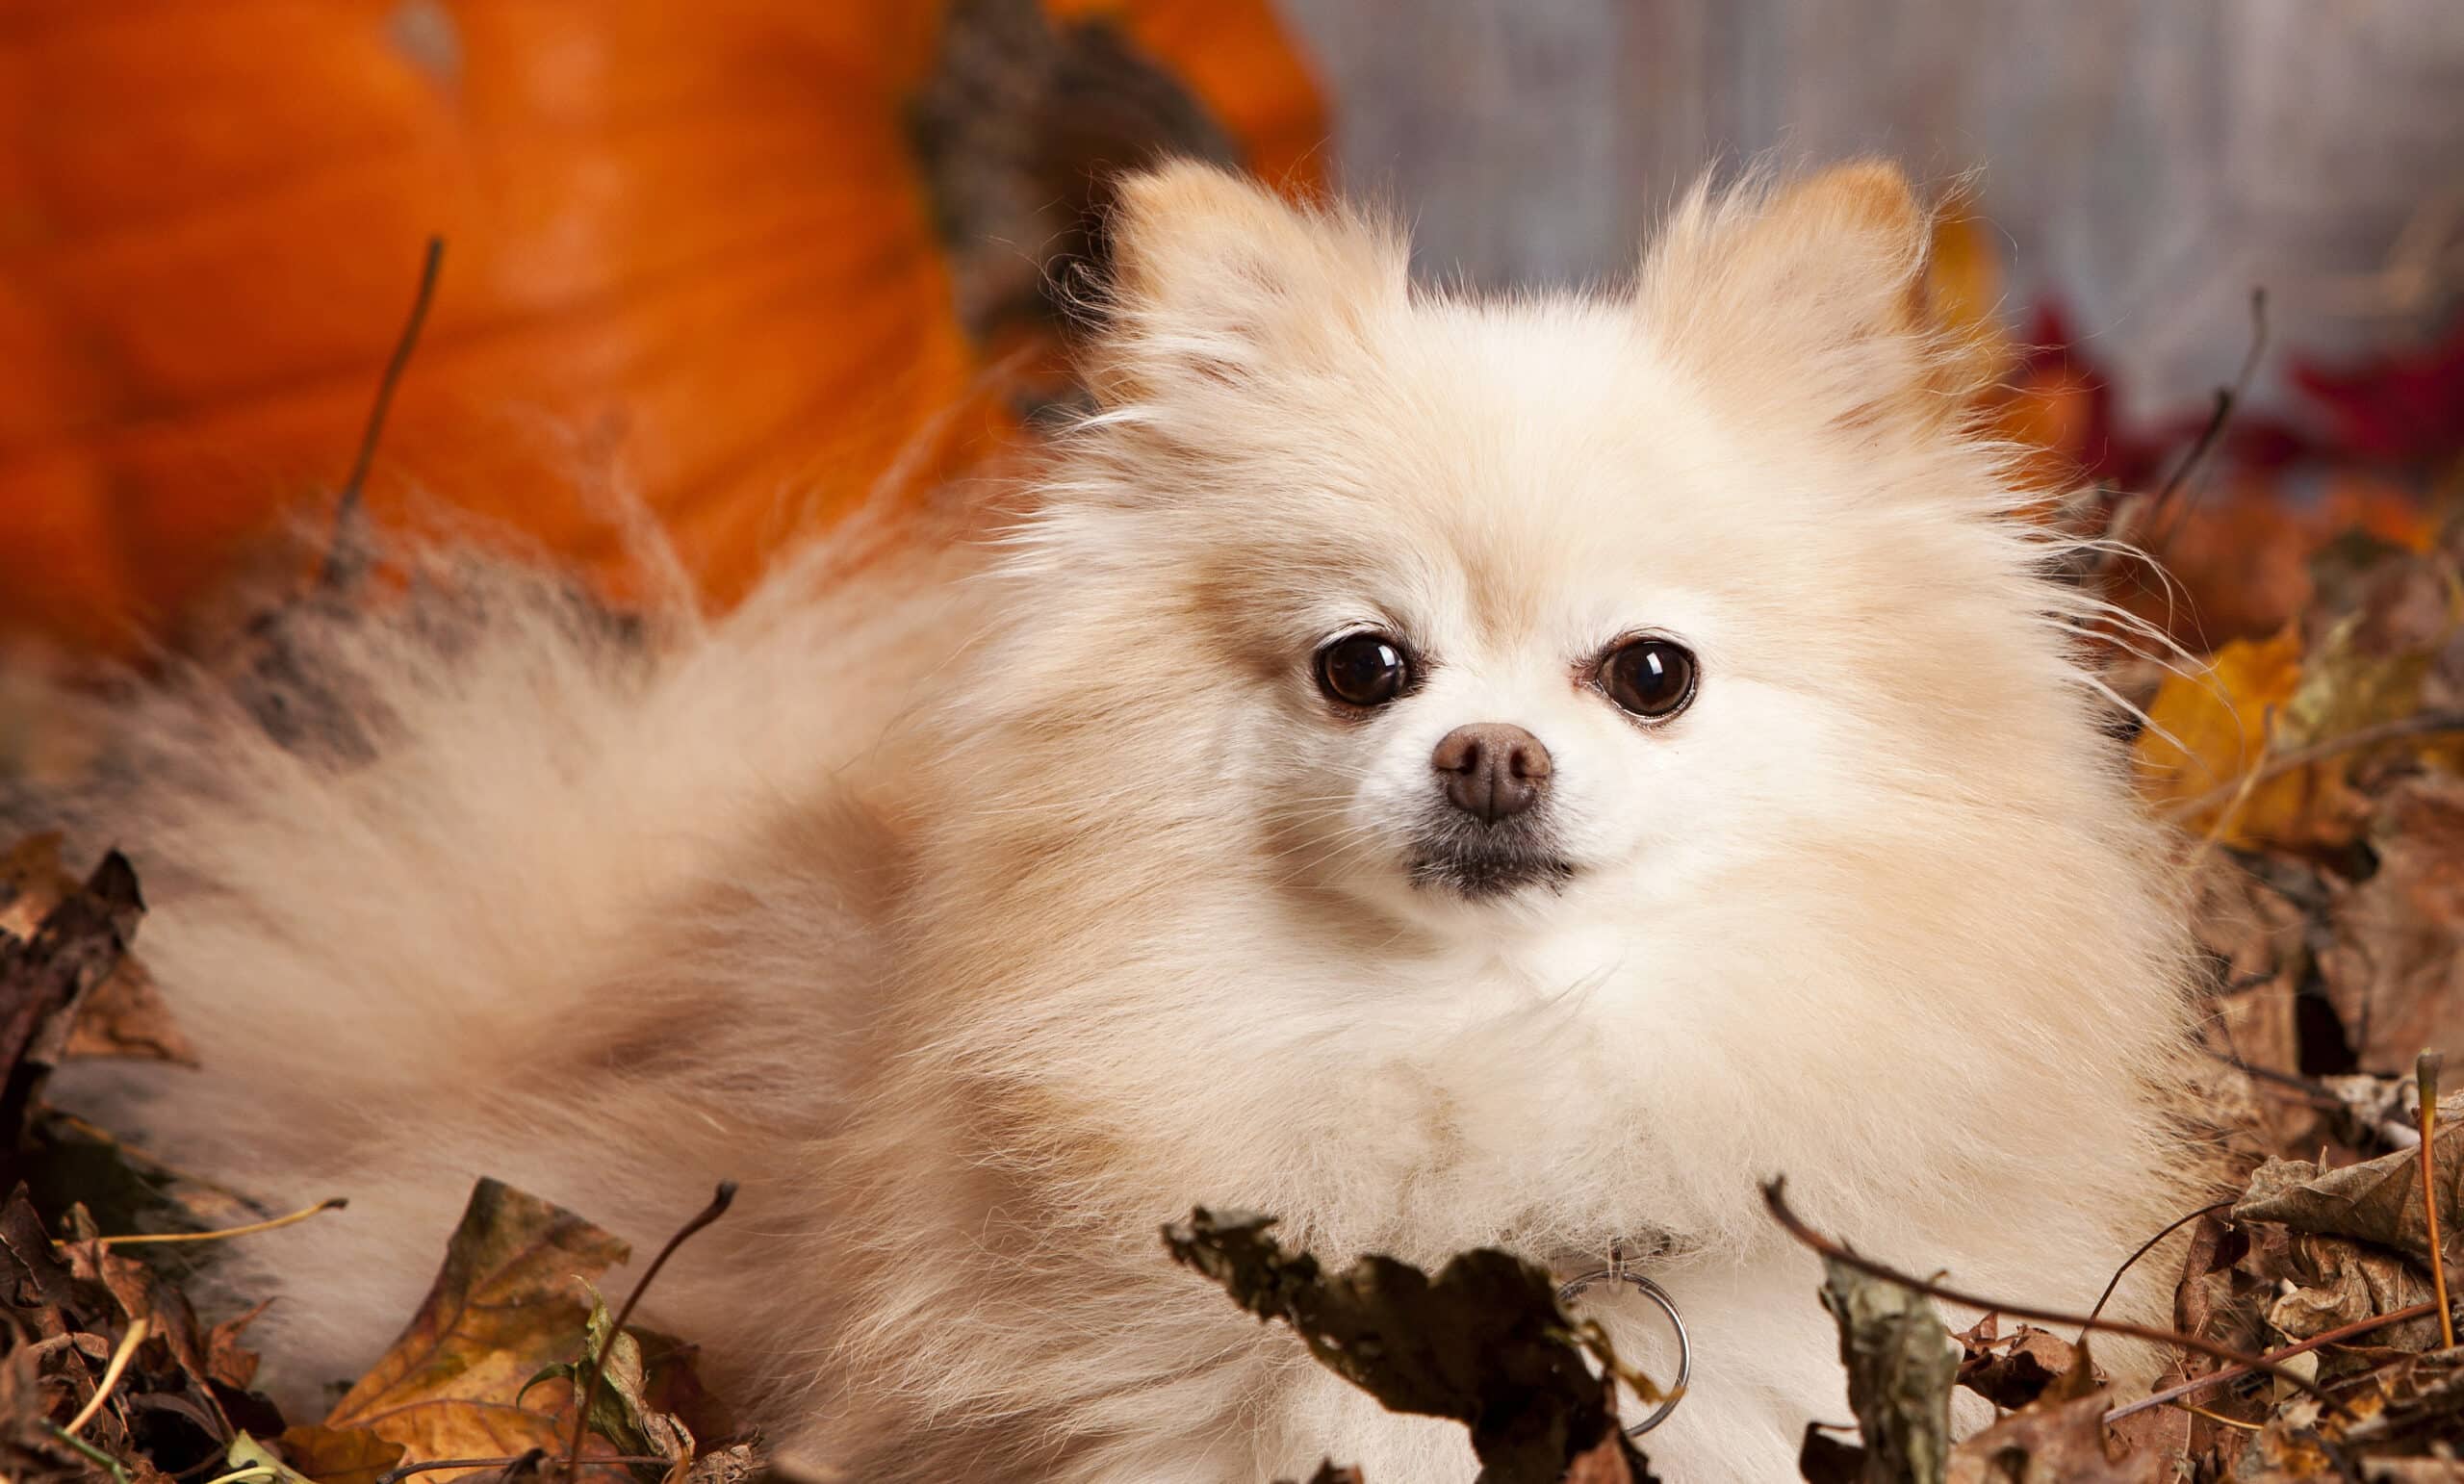 Popular Pomeranian Haircuts - Splash and Dash for Dogs